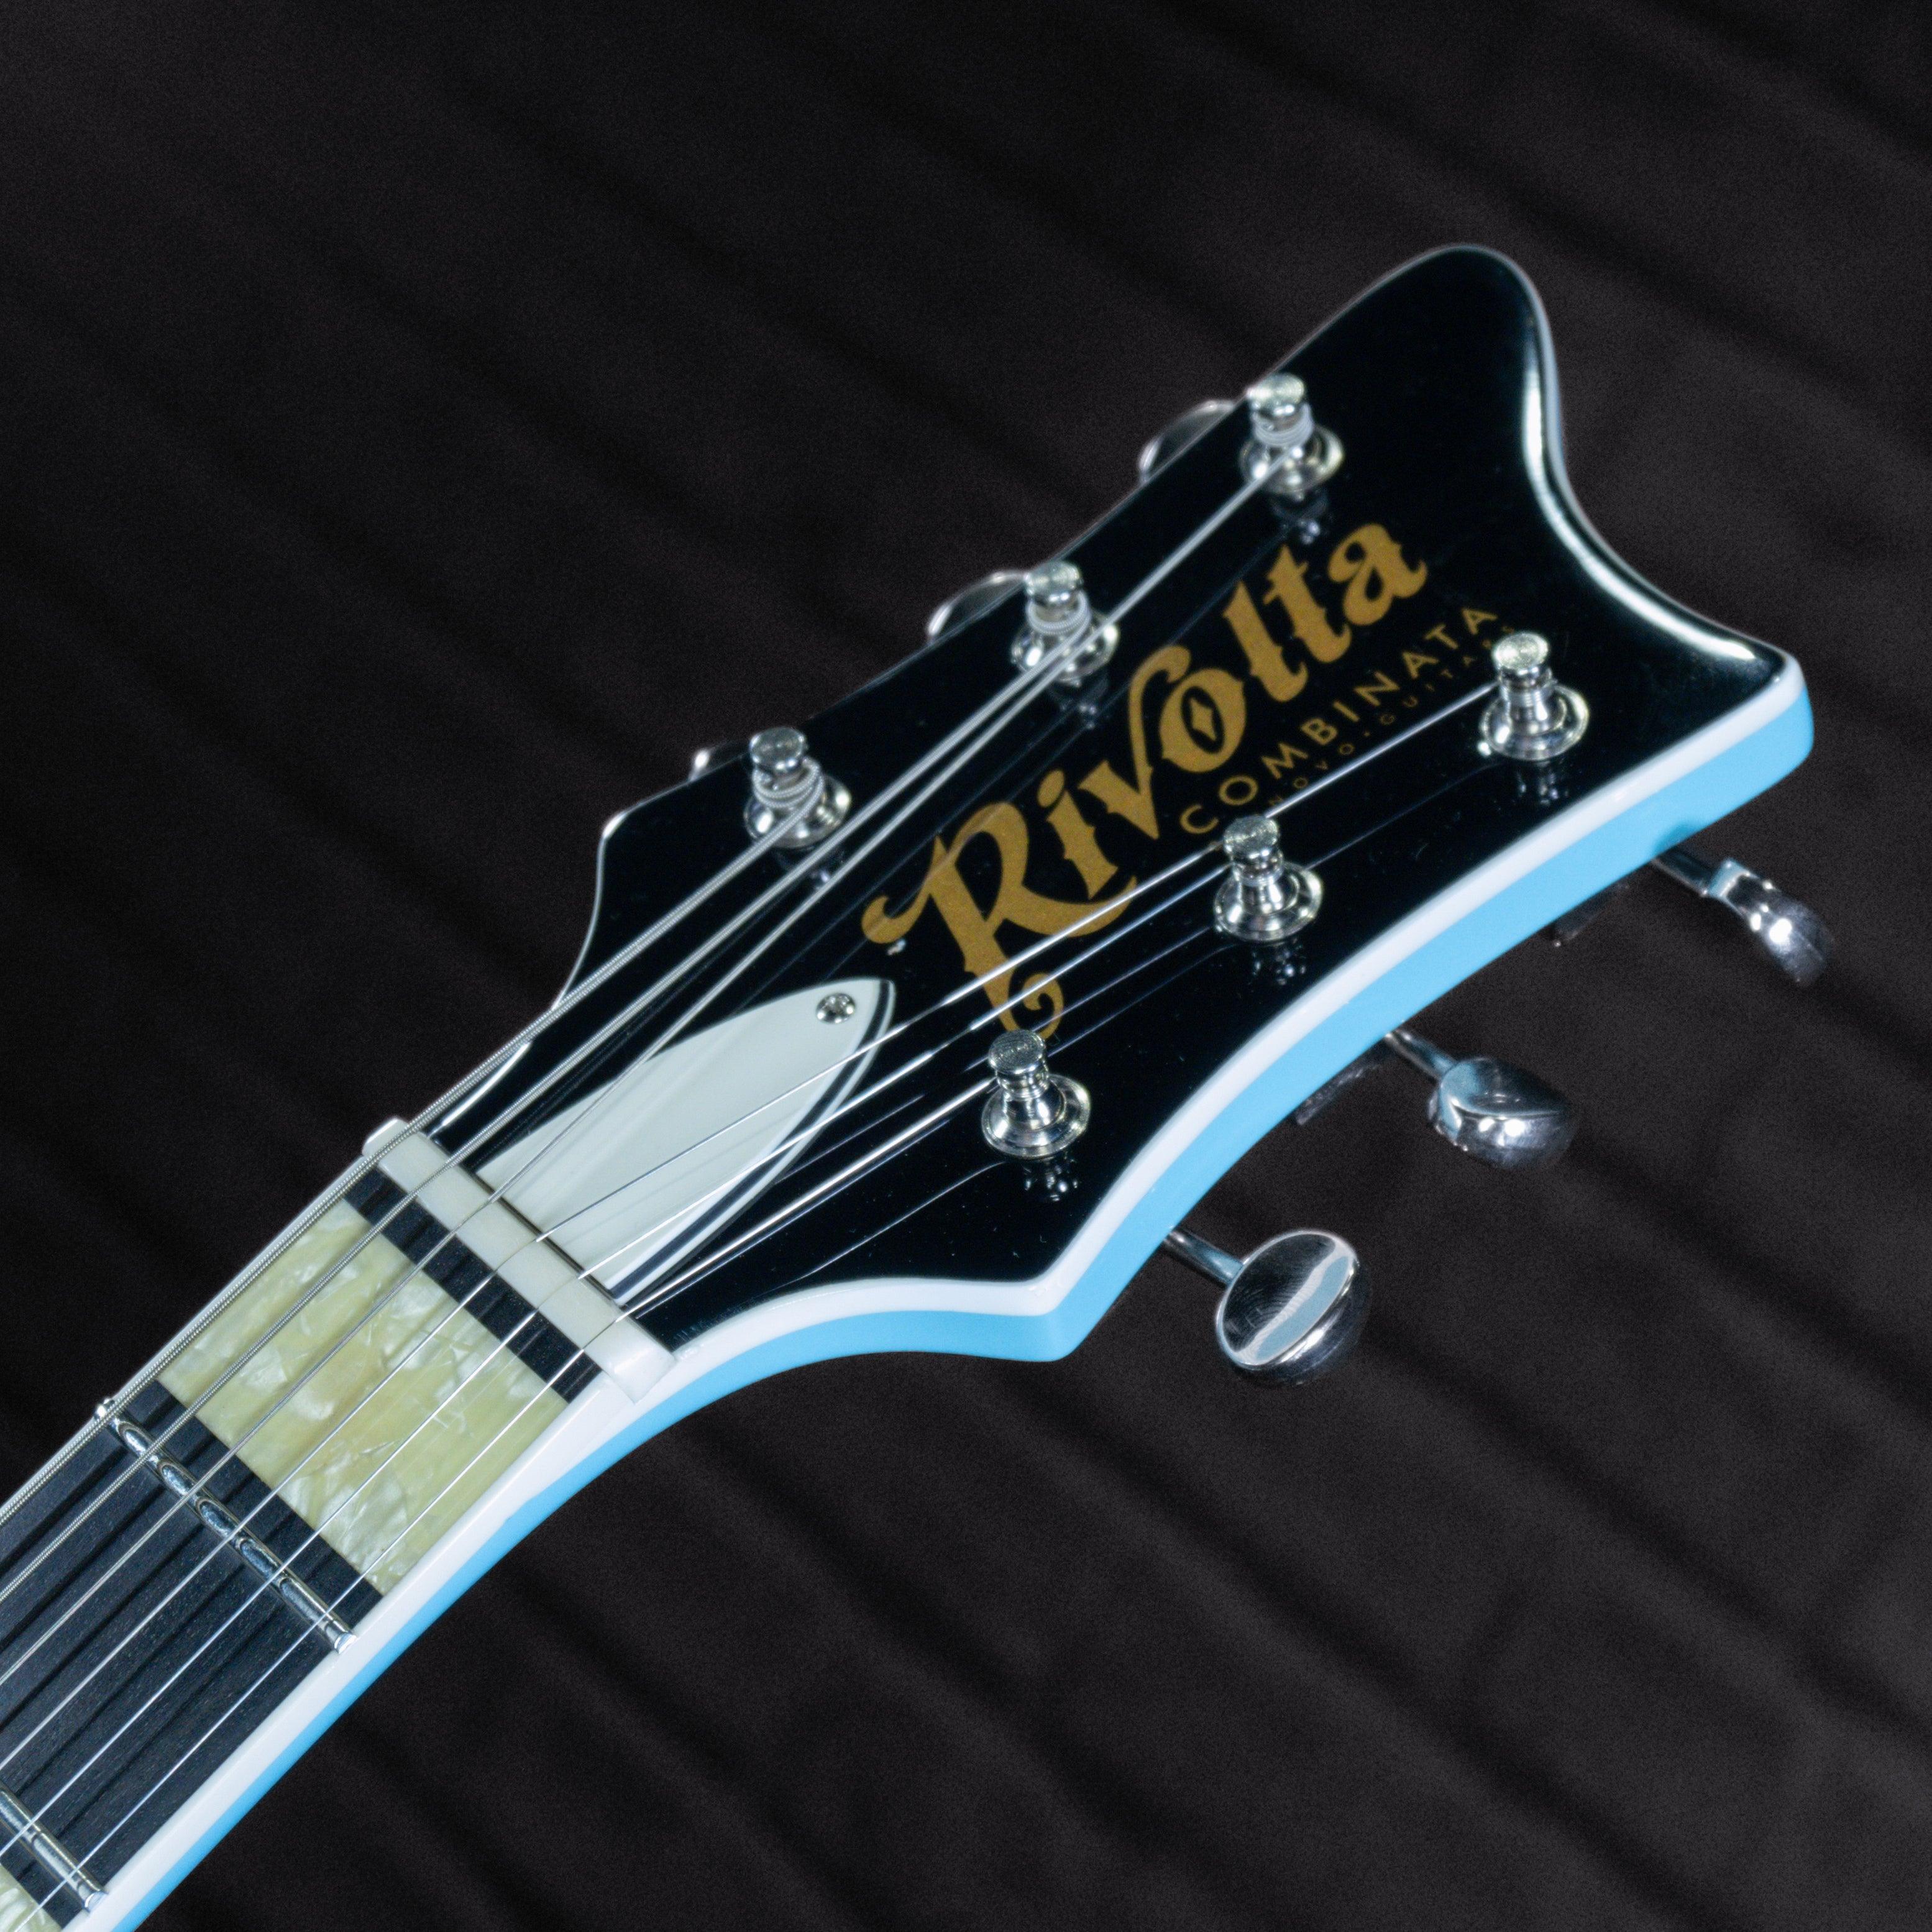 Rivolta Combinata XVII HSS "Califia Blue" (Impulse Music Co. Exclusive) Electric Guitar - Impulse Music Co.